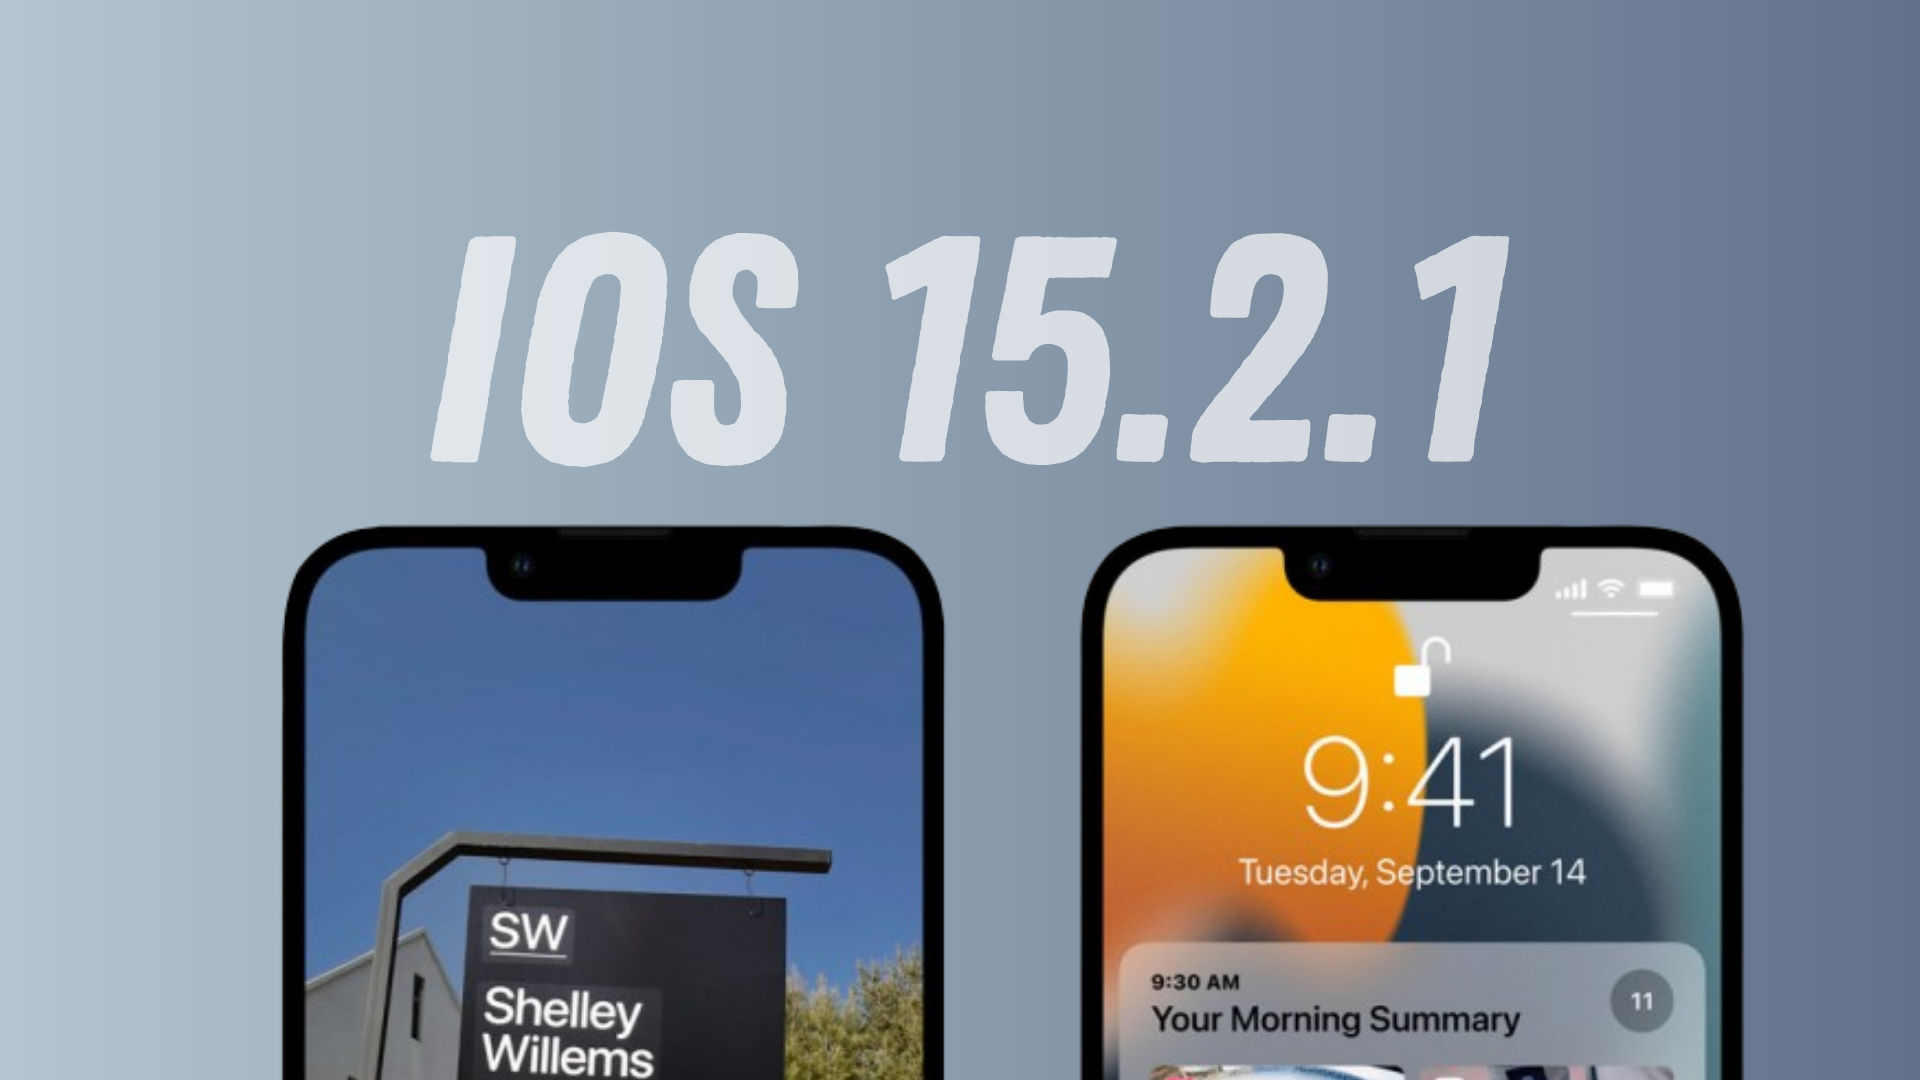 Apple releases iOS 15.2.1 and iPadOS 15.2.1 as minor incremental update